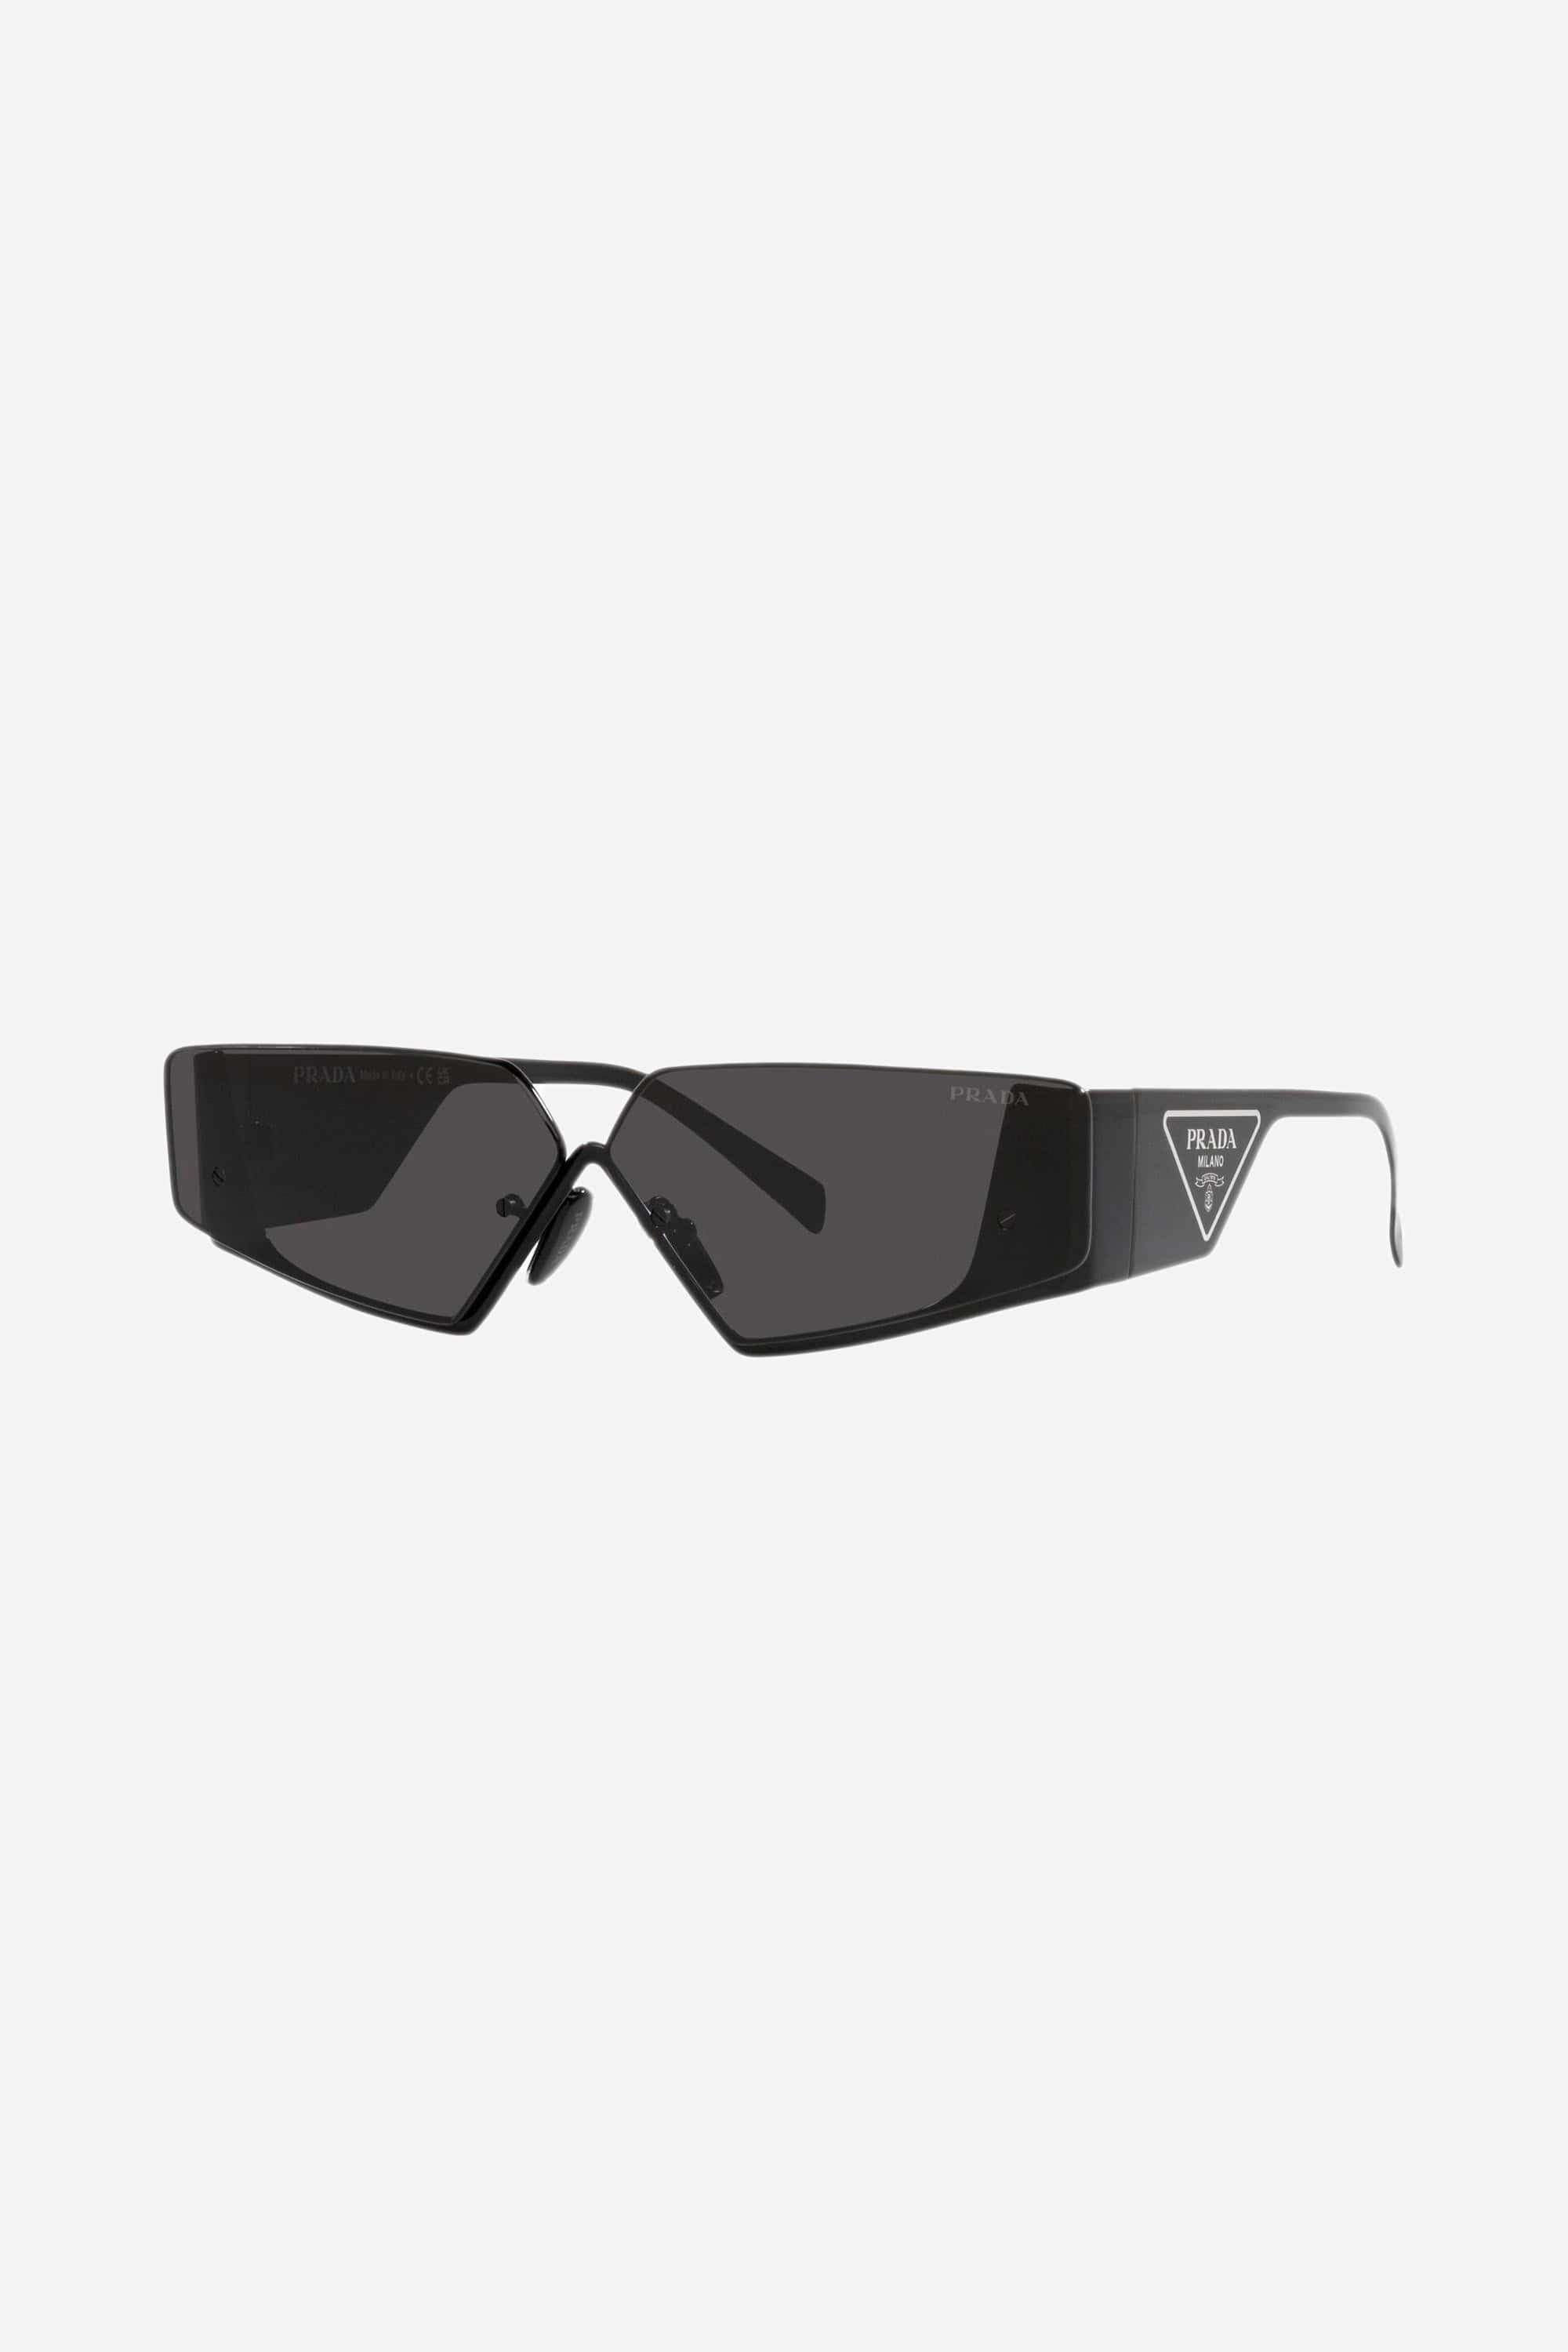 Prada Flat Top Black Sunglasses Man Catwalk for Men | Lyst